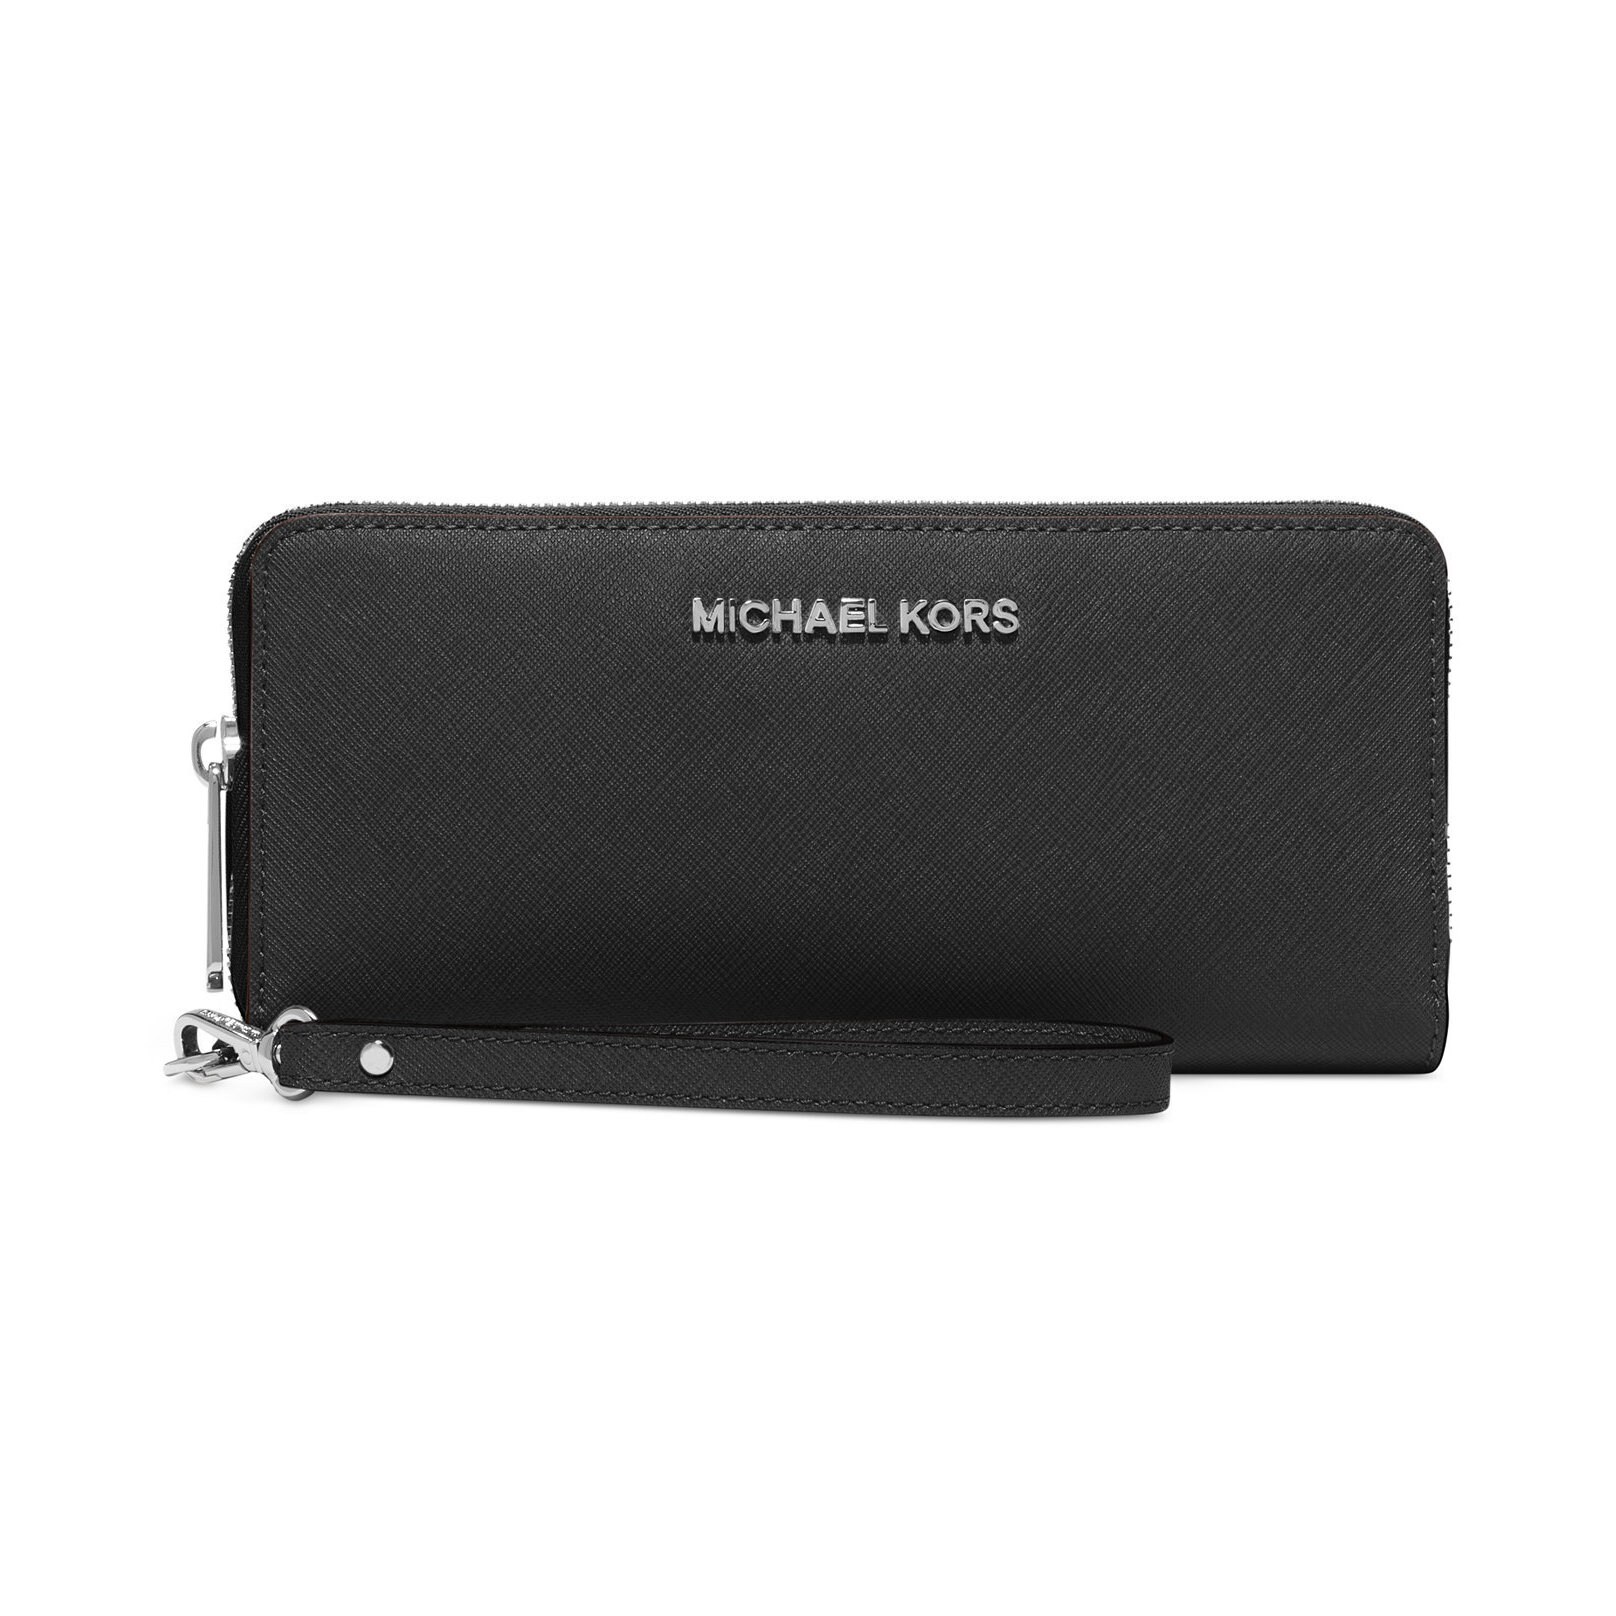 Michael Kors Black Leather Continental 